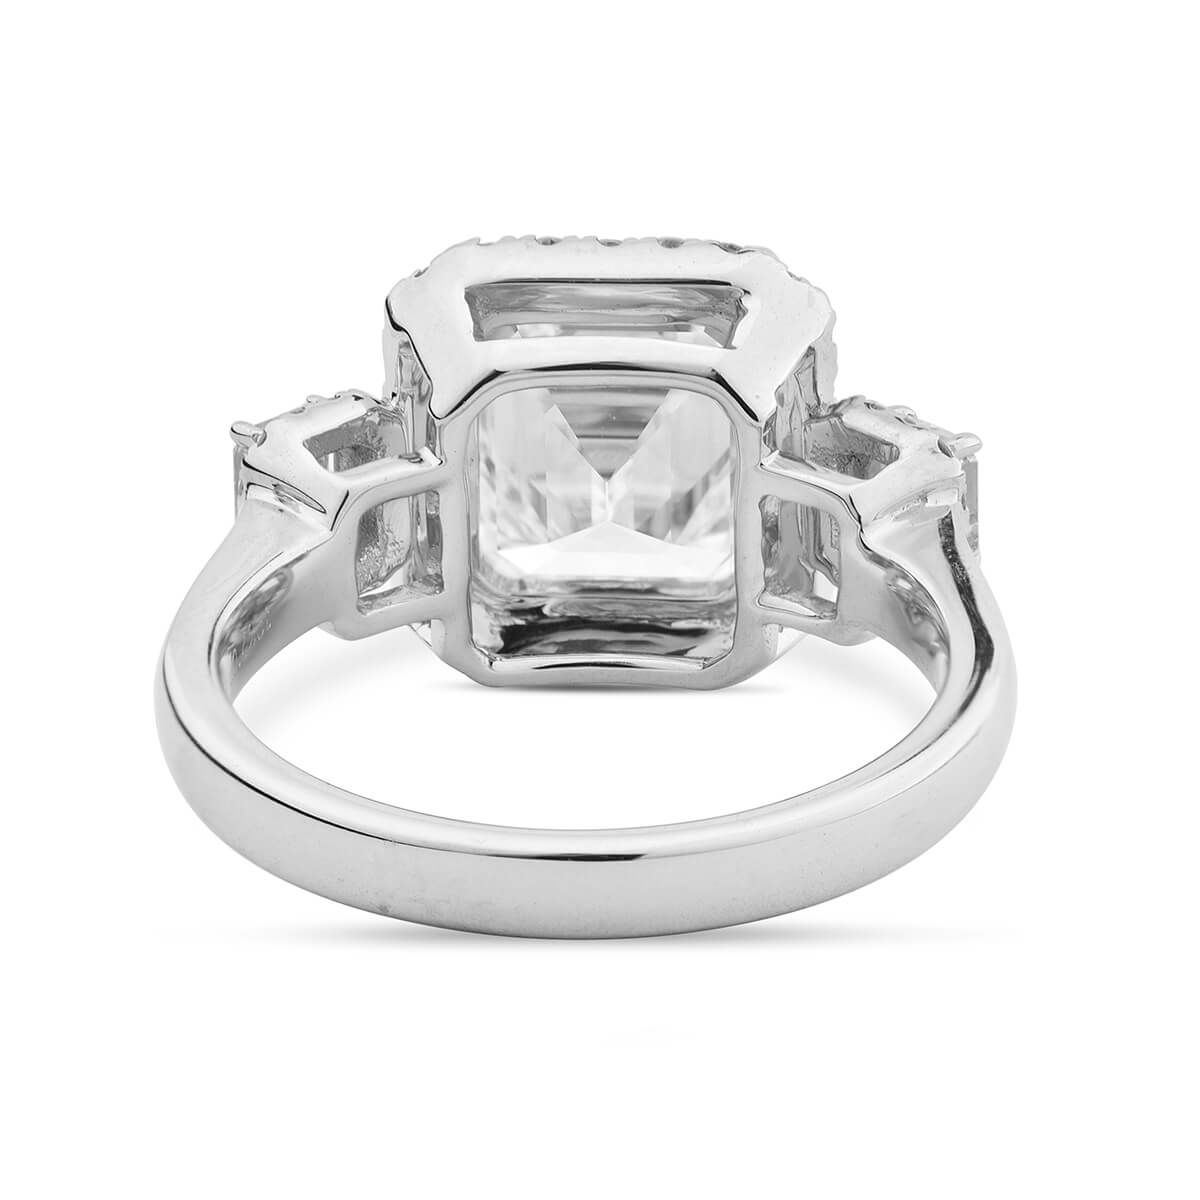  White Diamond Ring, 3.94 Ct. TW, Emerald shape, GIA Certified, 5273065615